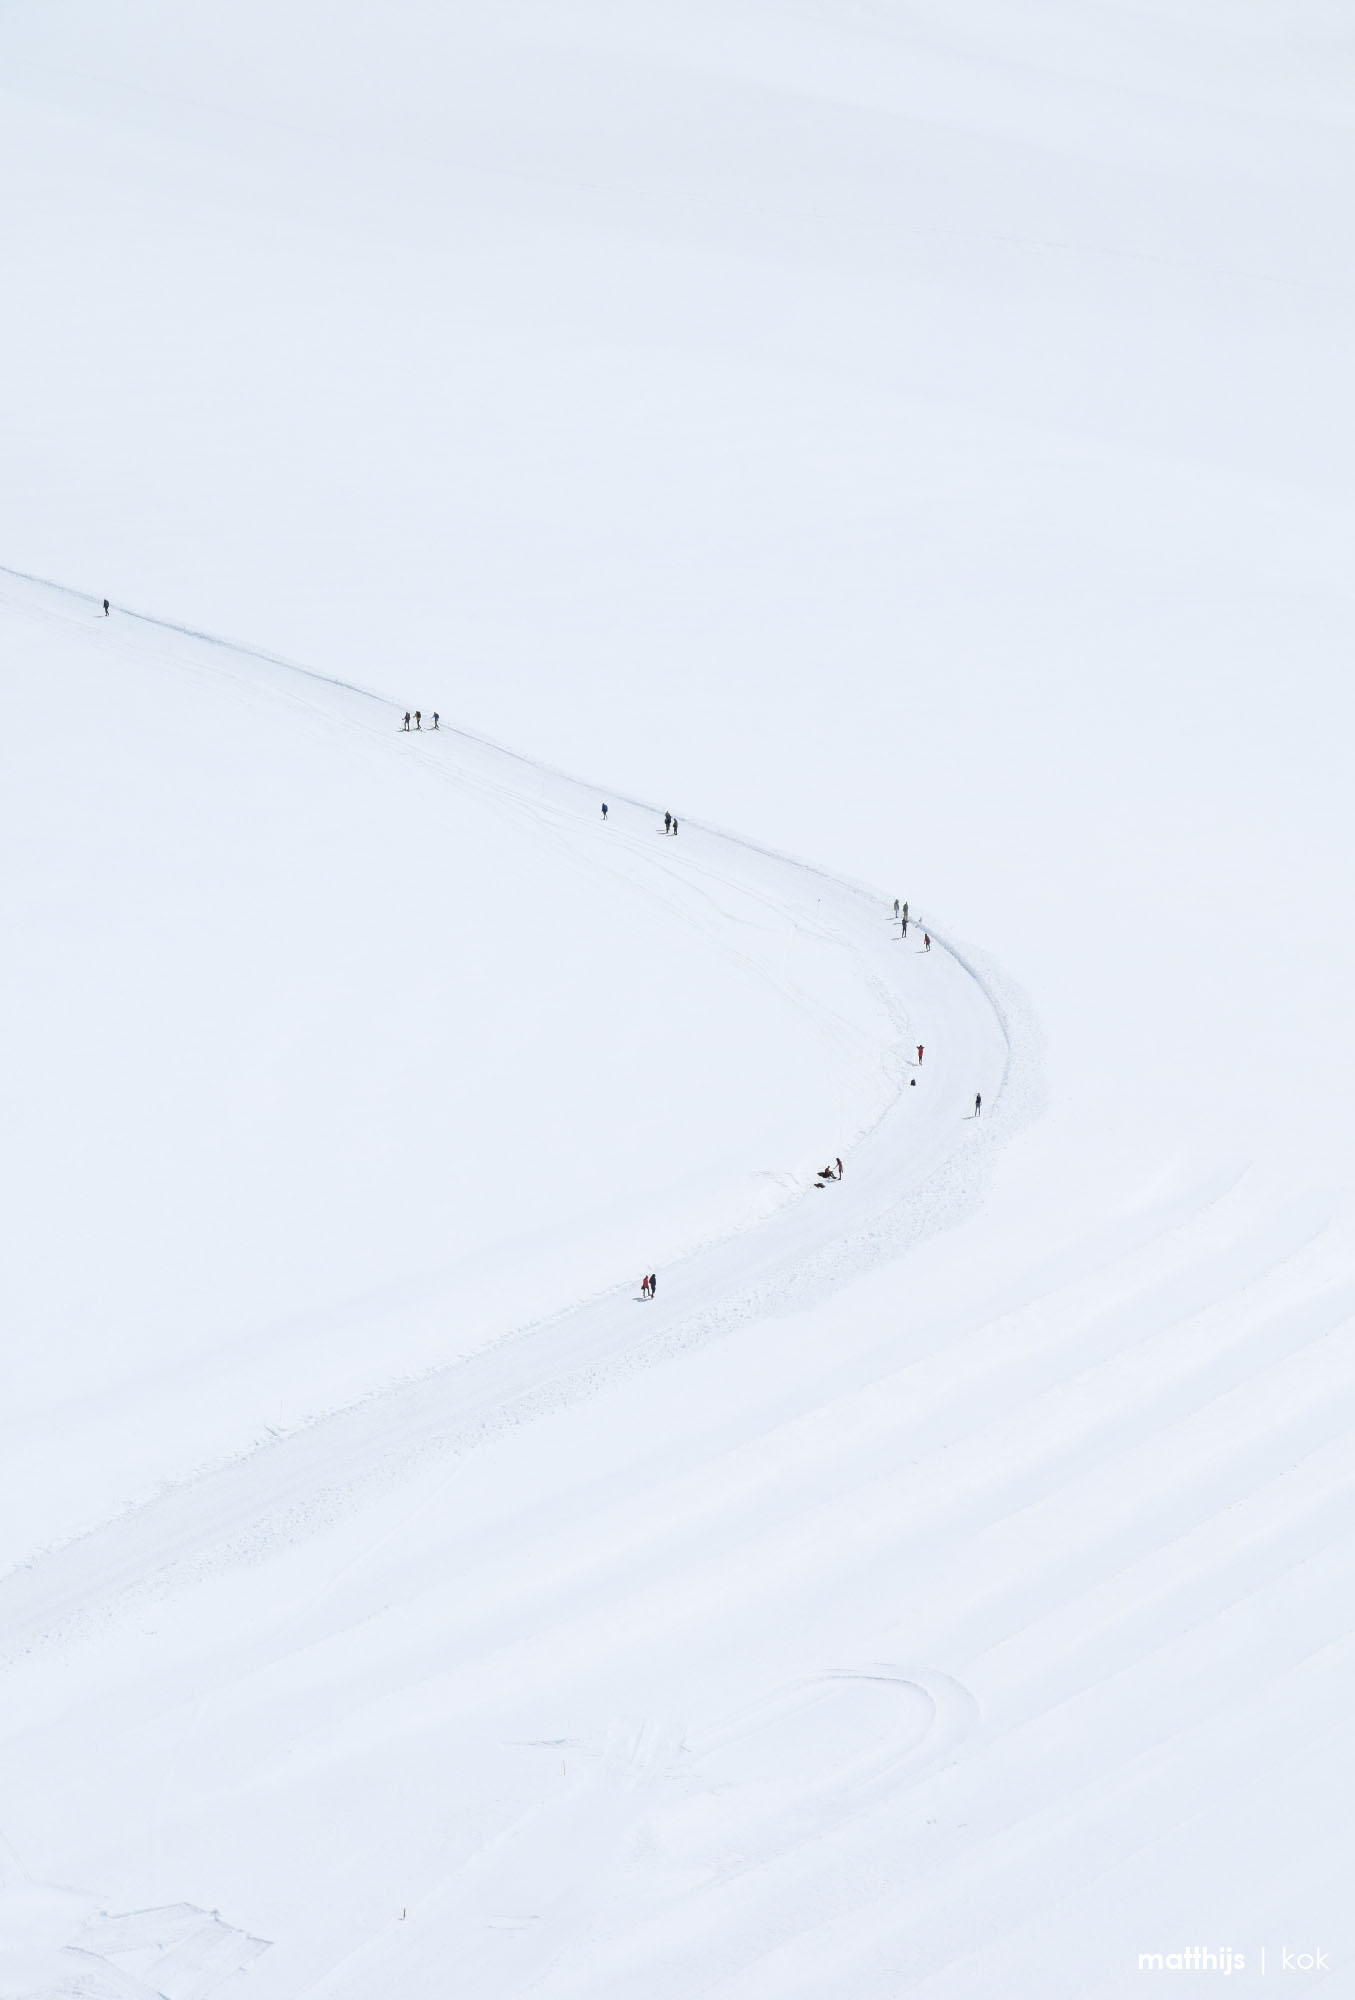 Path to the Mönchsjoch Hut, Jungfraujoch Swiss Alps, Switzerland | Photo by Matthijs Kok